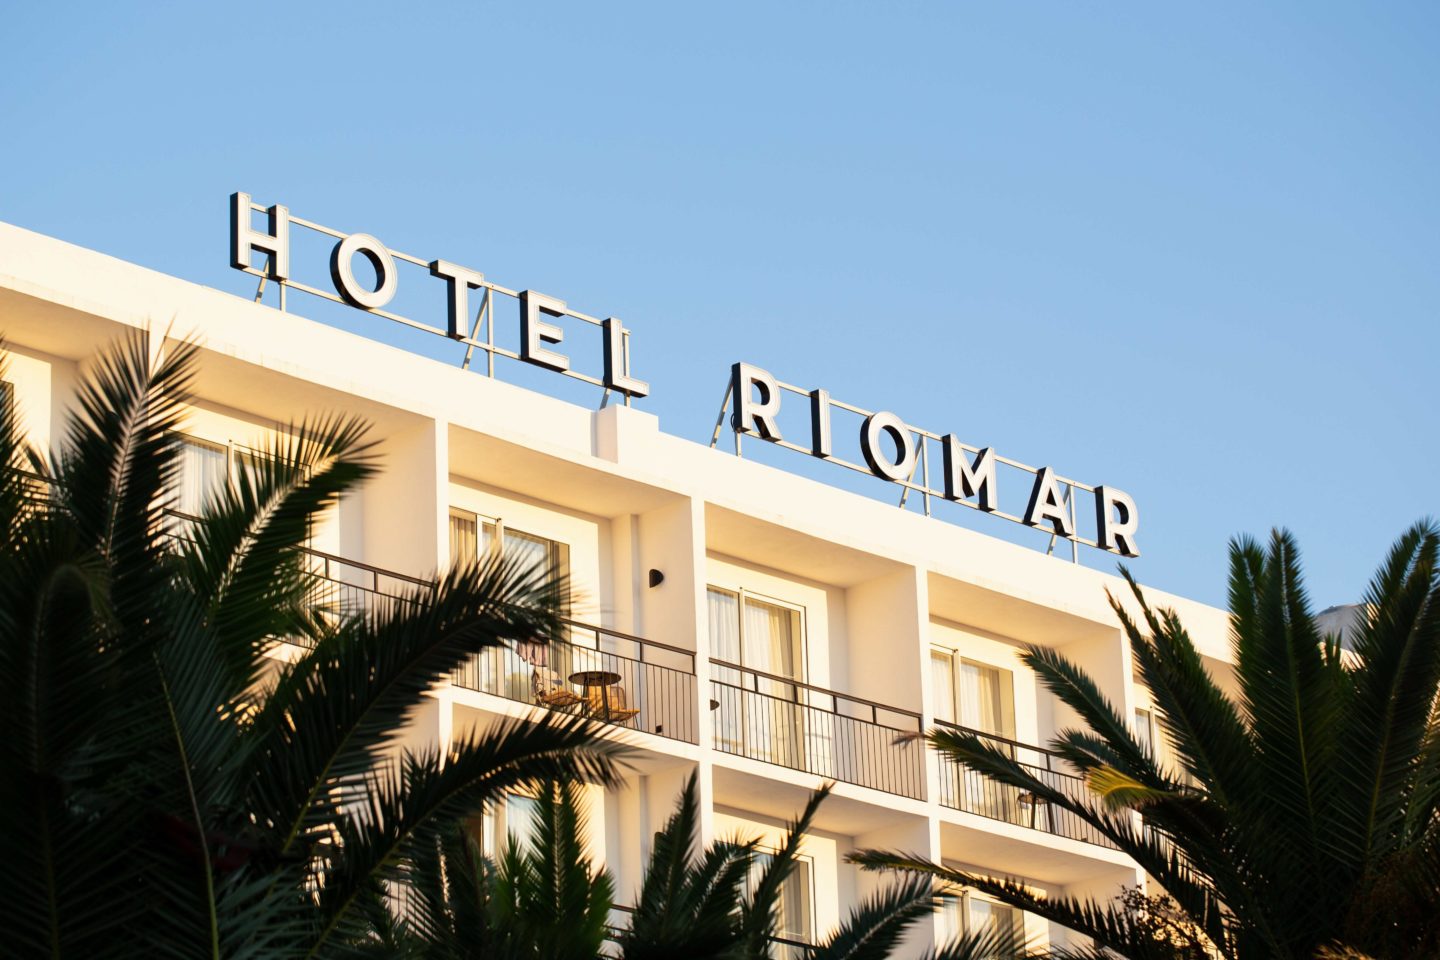 Hotel Riomar Ibiza: a Picturesque Hotel Along the White Isles